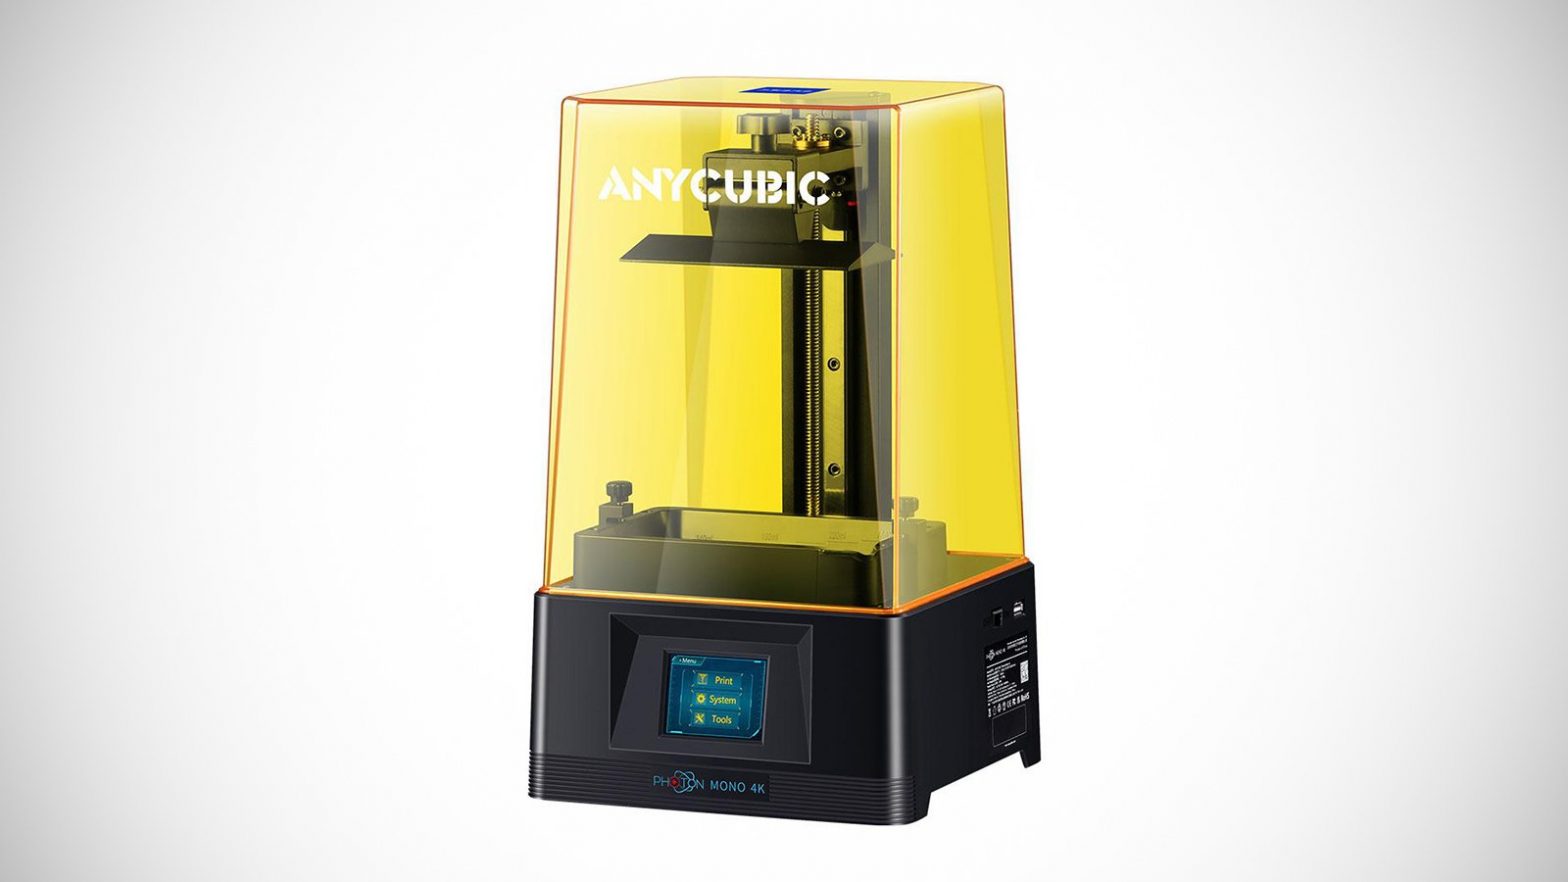 Anycubic Photon Mono 4K 3D Printer Review